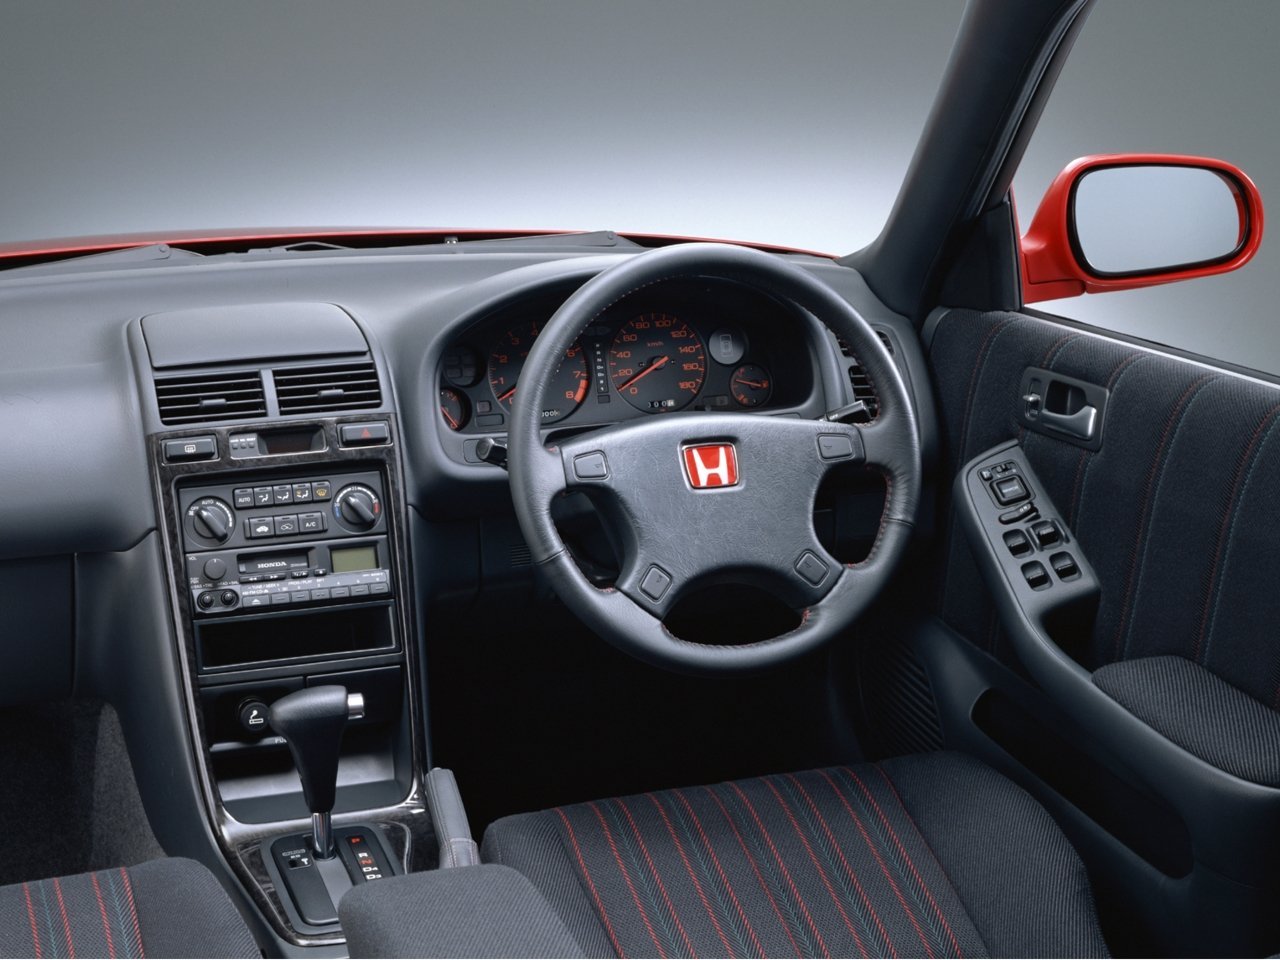 седан Honda Ascot 1993 - 1997г выпуска модификация 2.0 AT (135 л.с.)